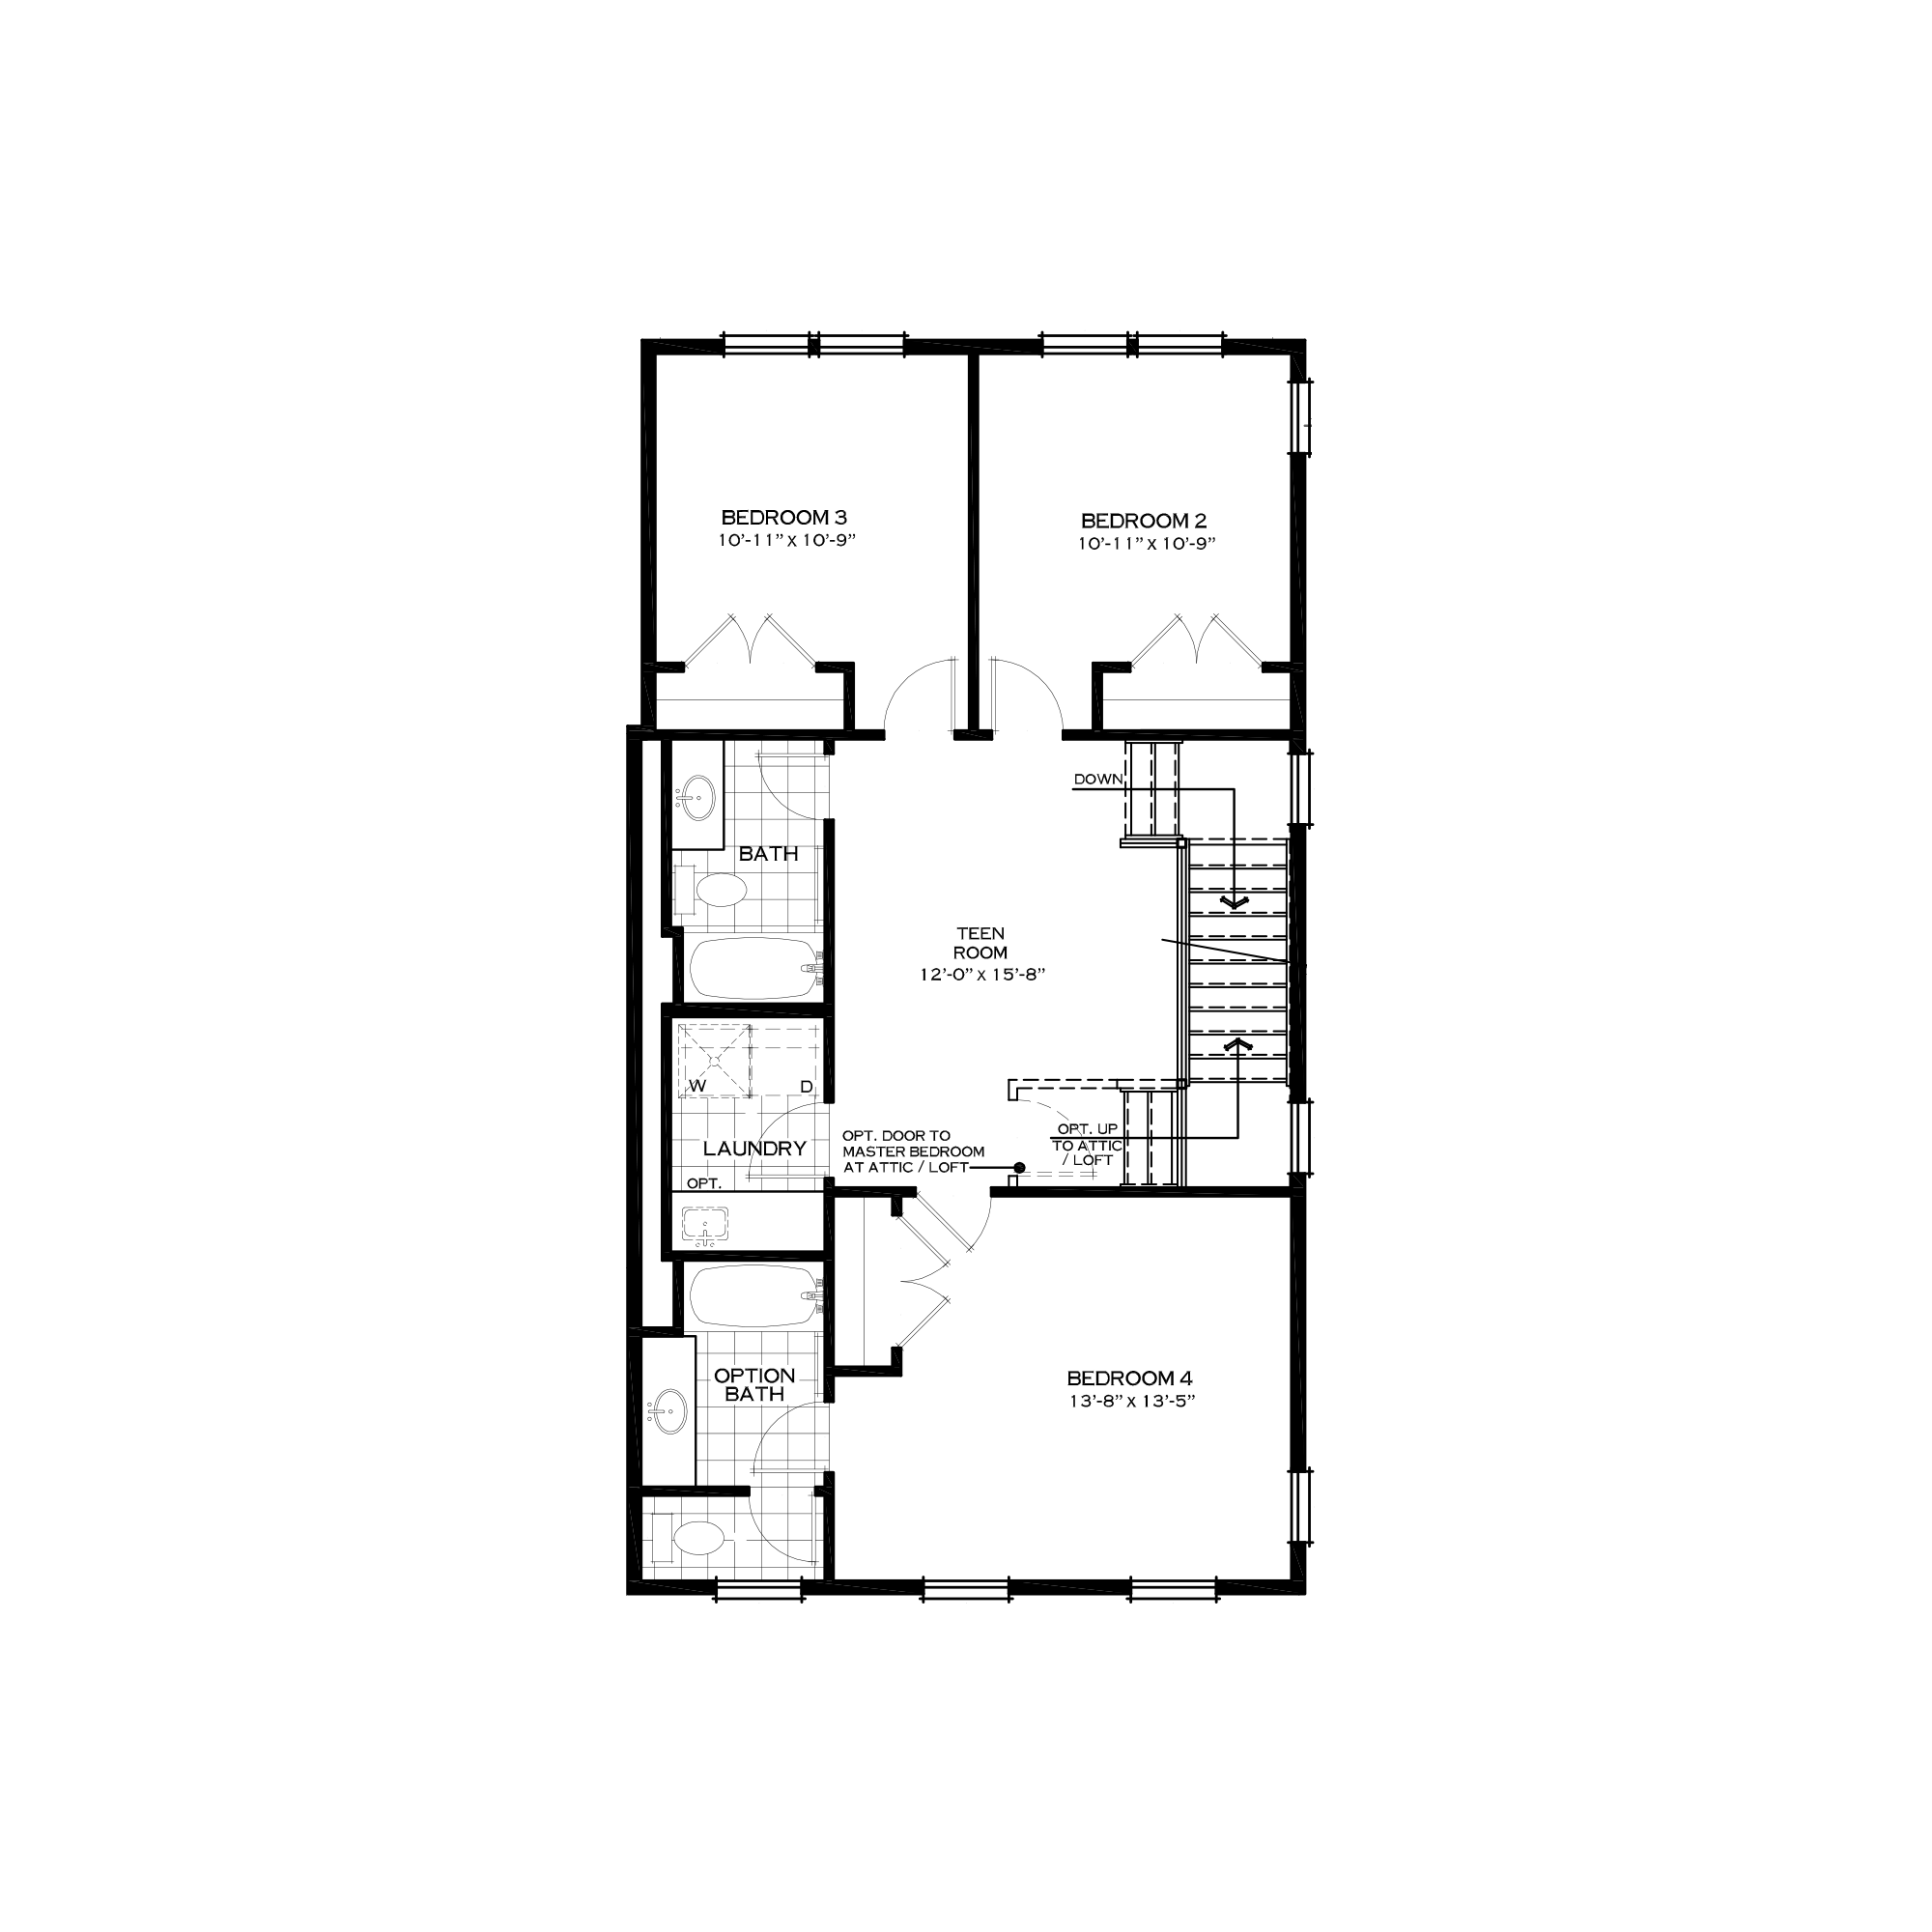 Optional Third Floor with Three Bedrooms